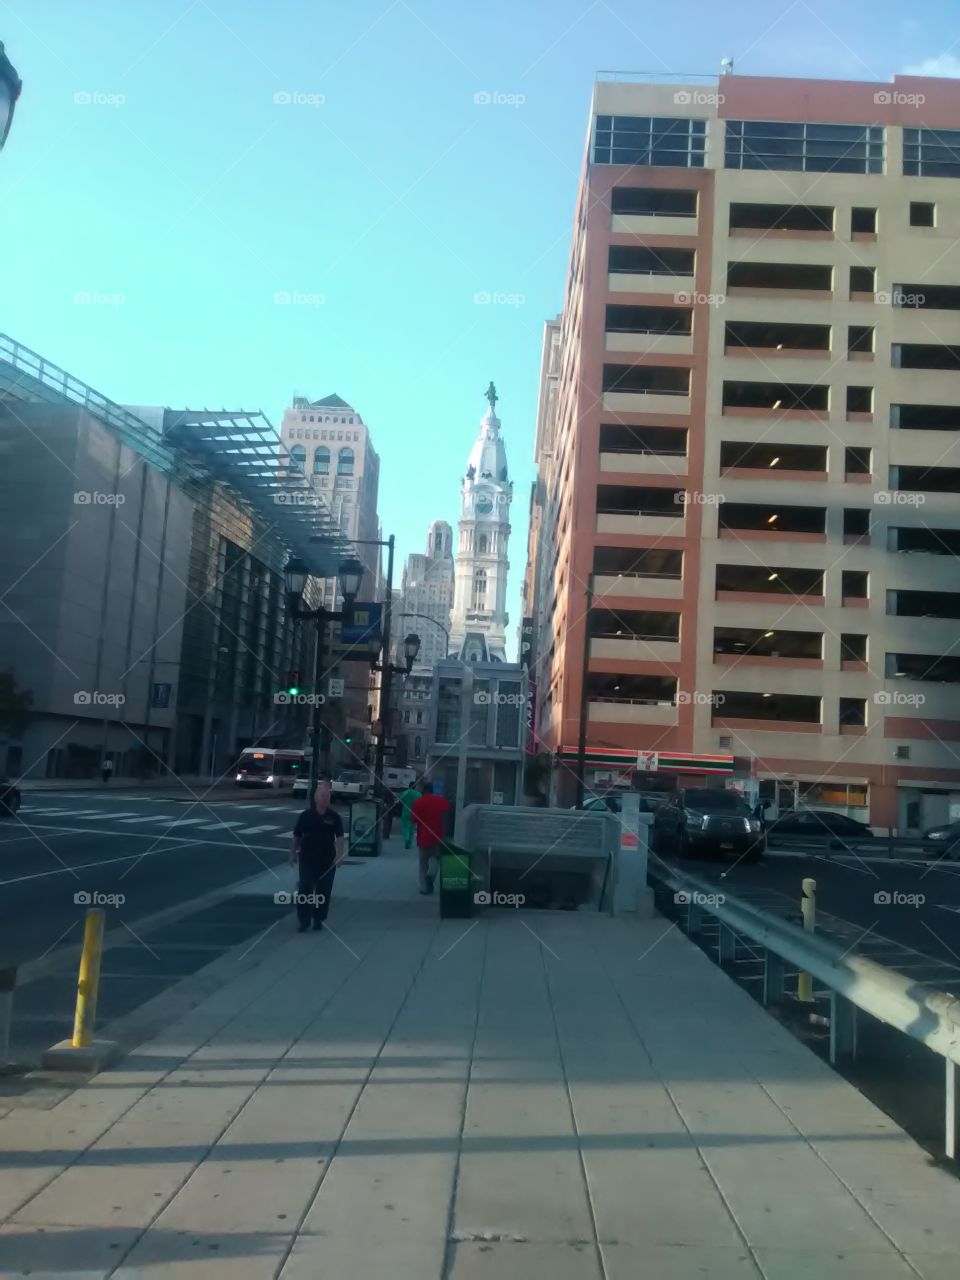 Center City Philadelphia